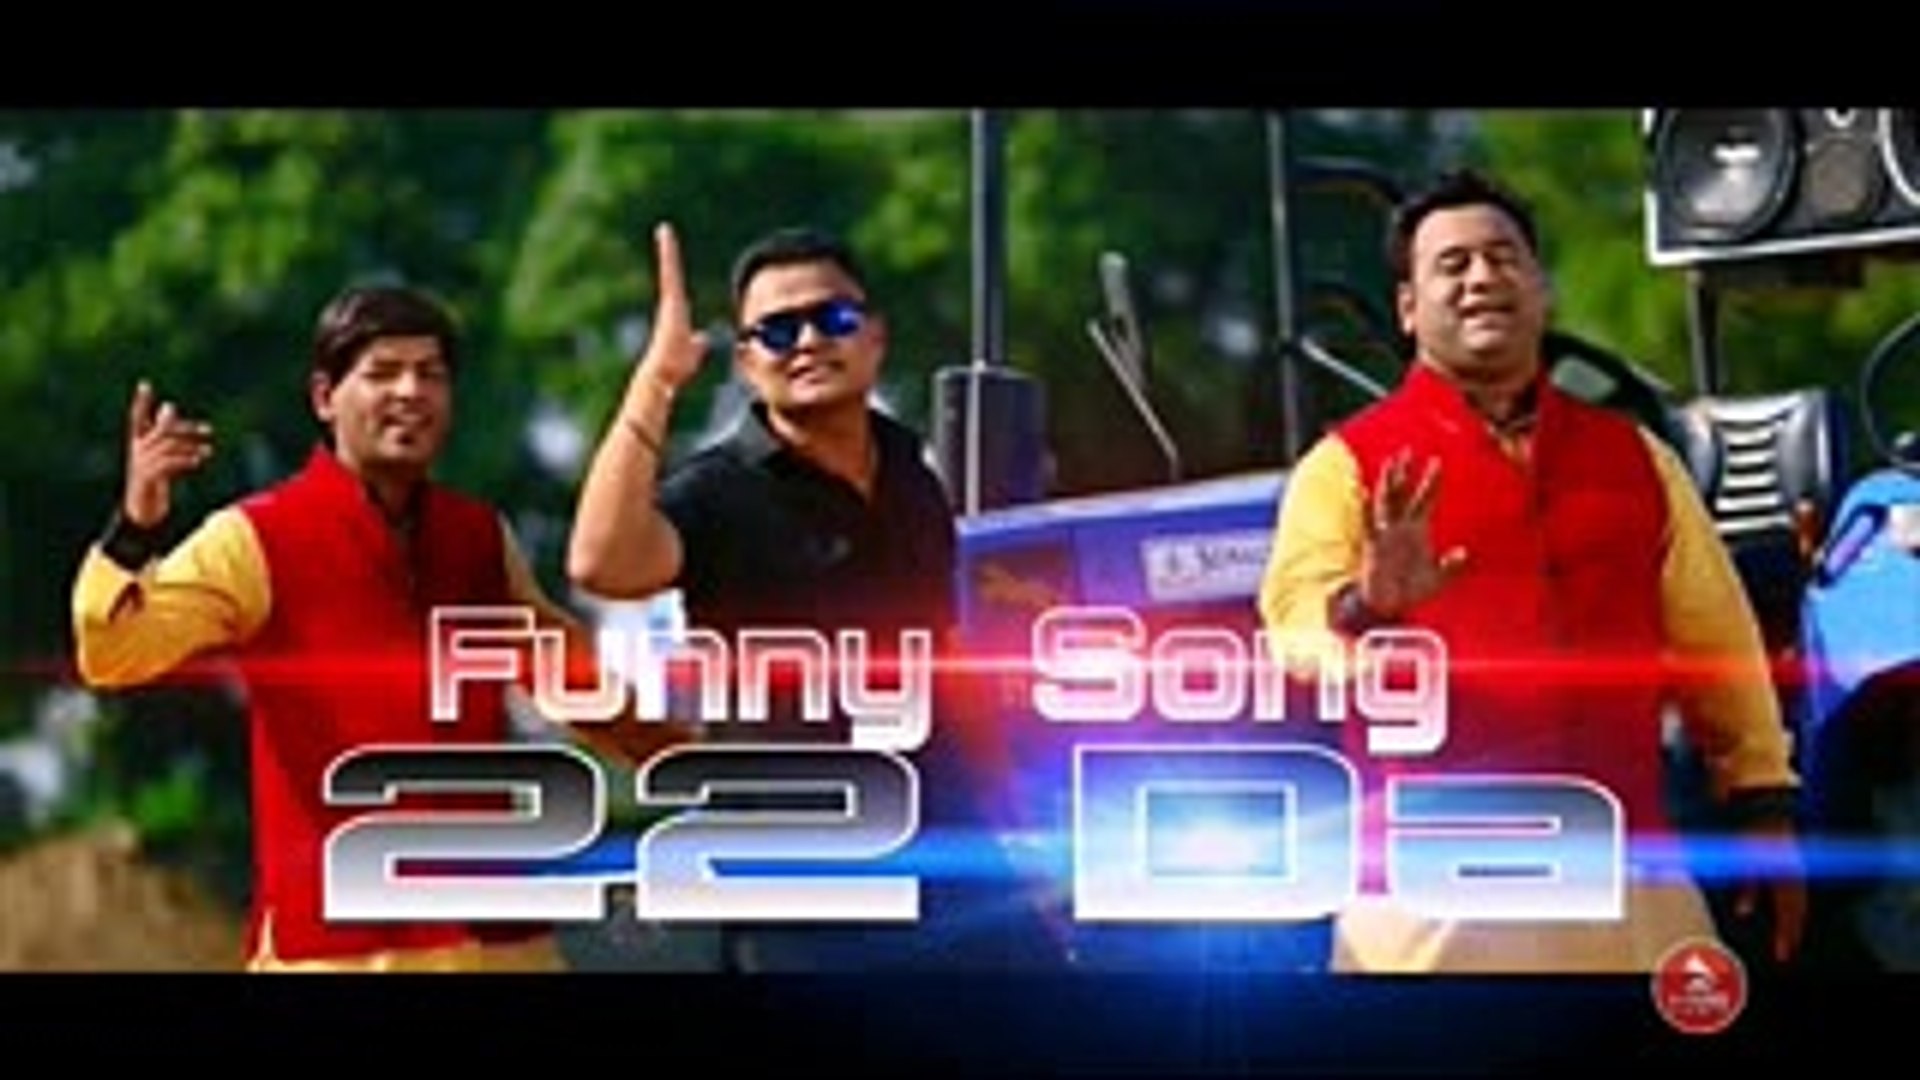 22 Da (Funny Song)(Happy Manila, Bo Bo Tochan Heela) - video Dailymotion